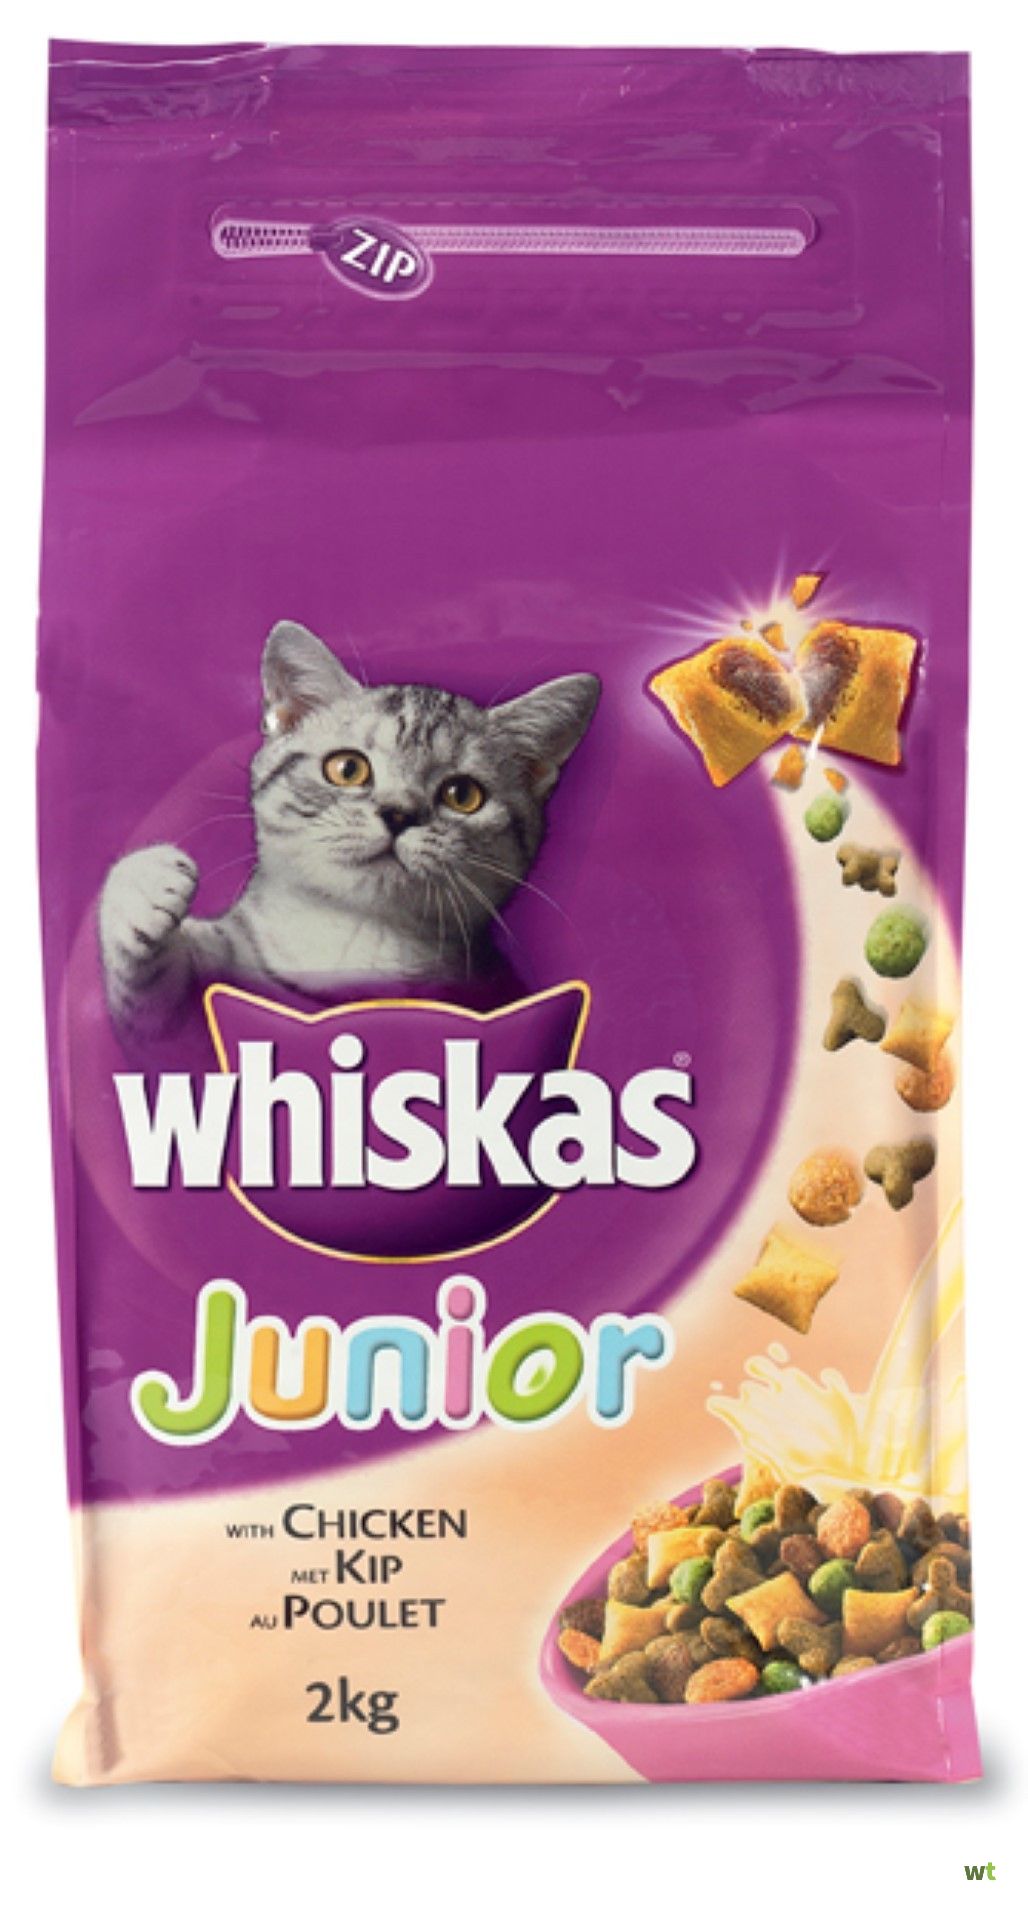 onduidelijk Omgeving Mooie jurk Kattenvoer Droog Junior Kip zak 1,9 kg Whiskas